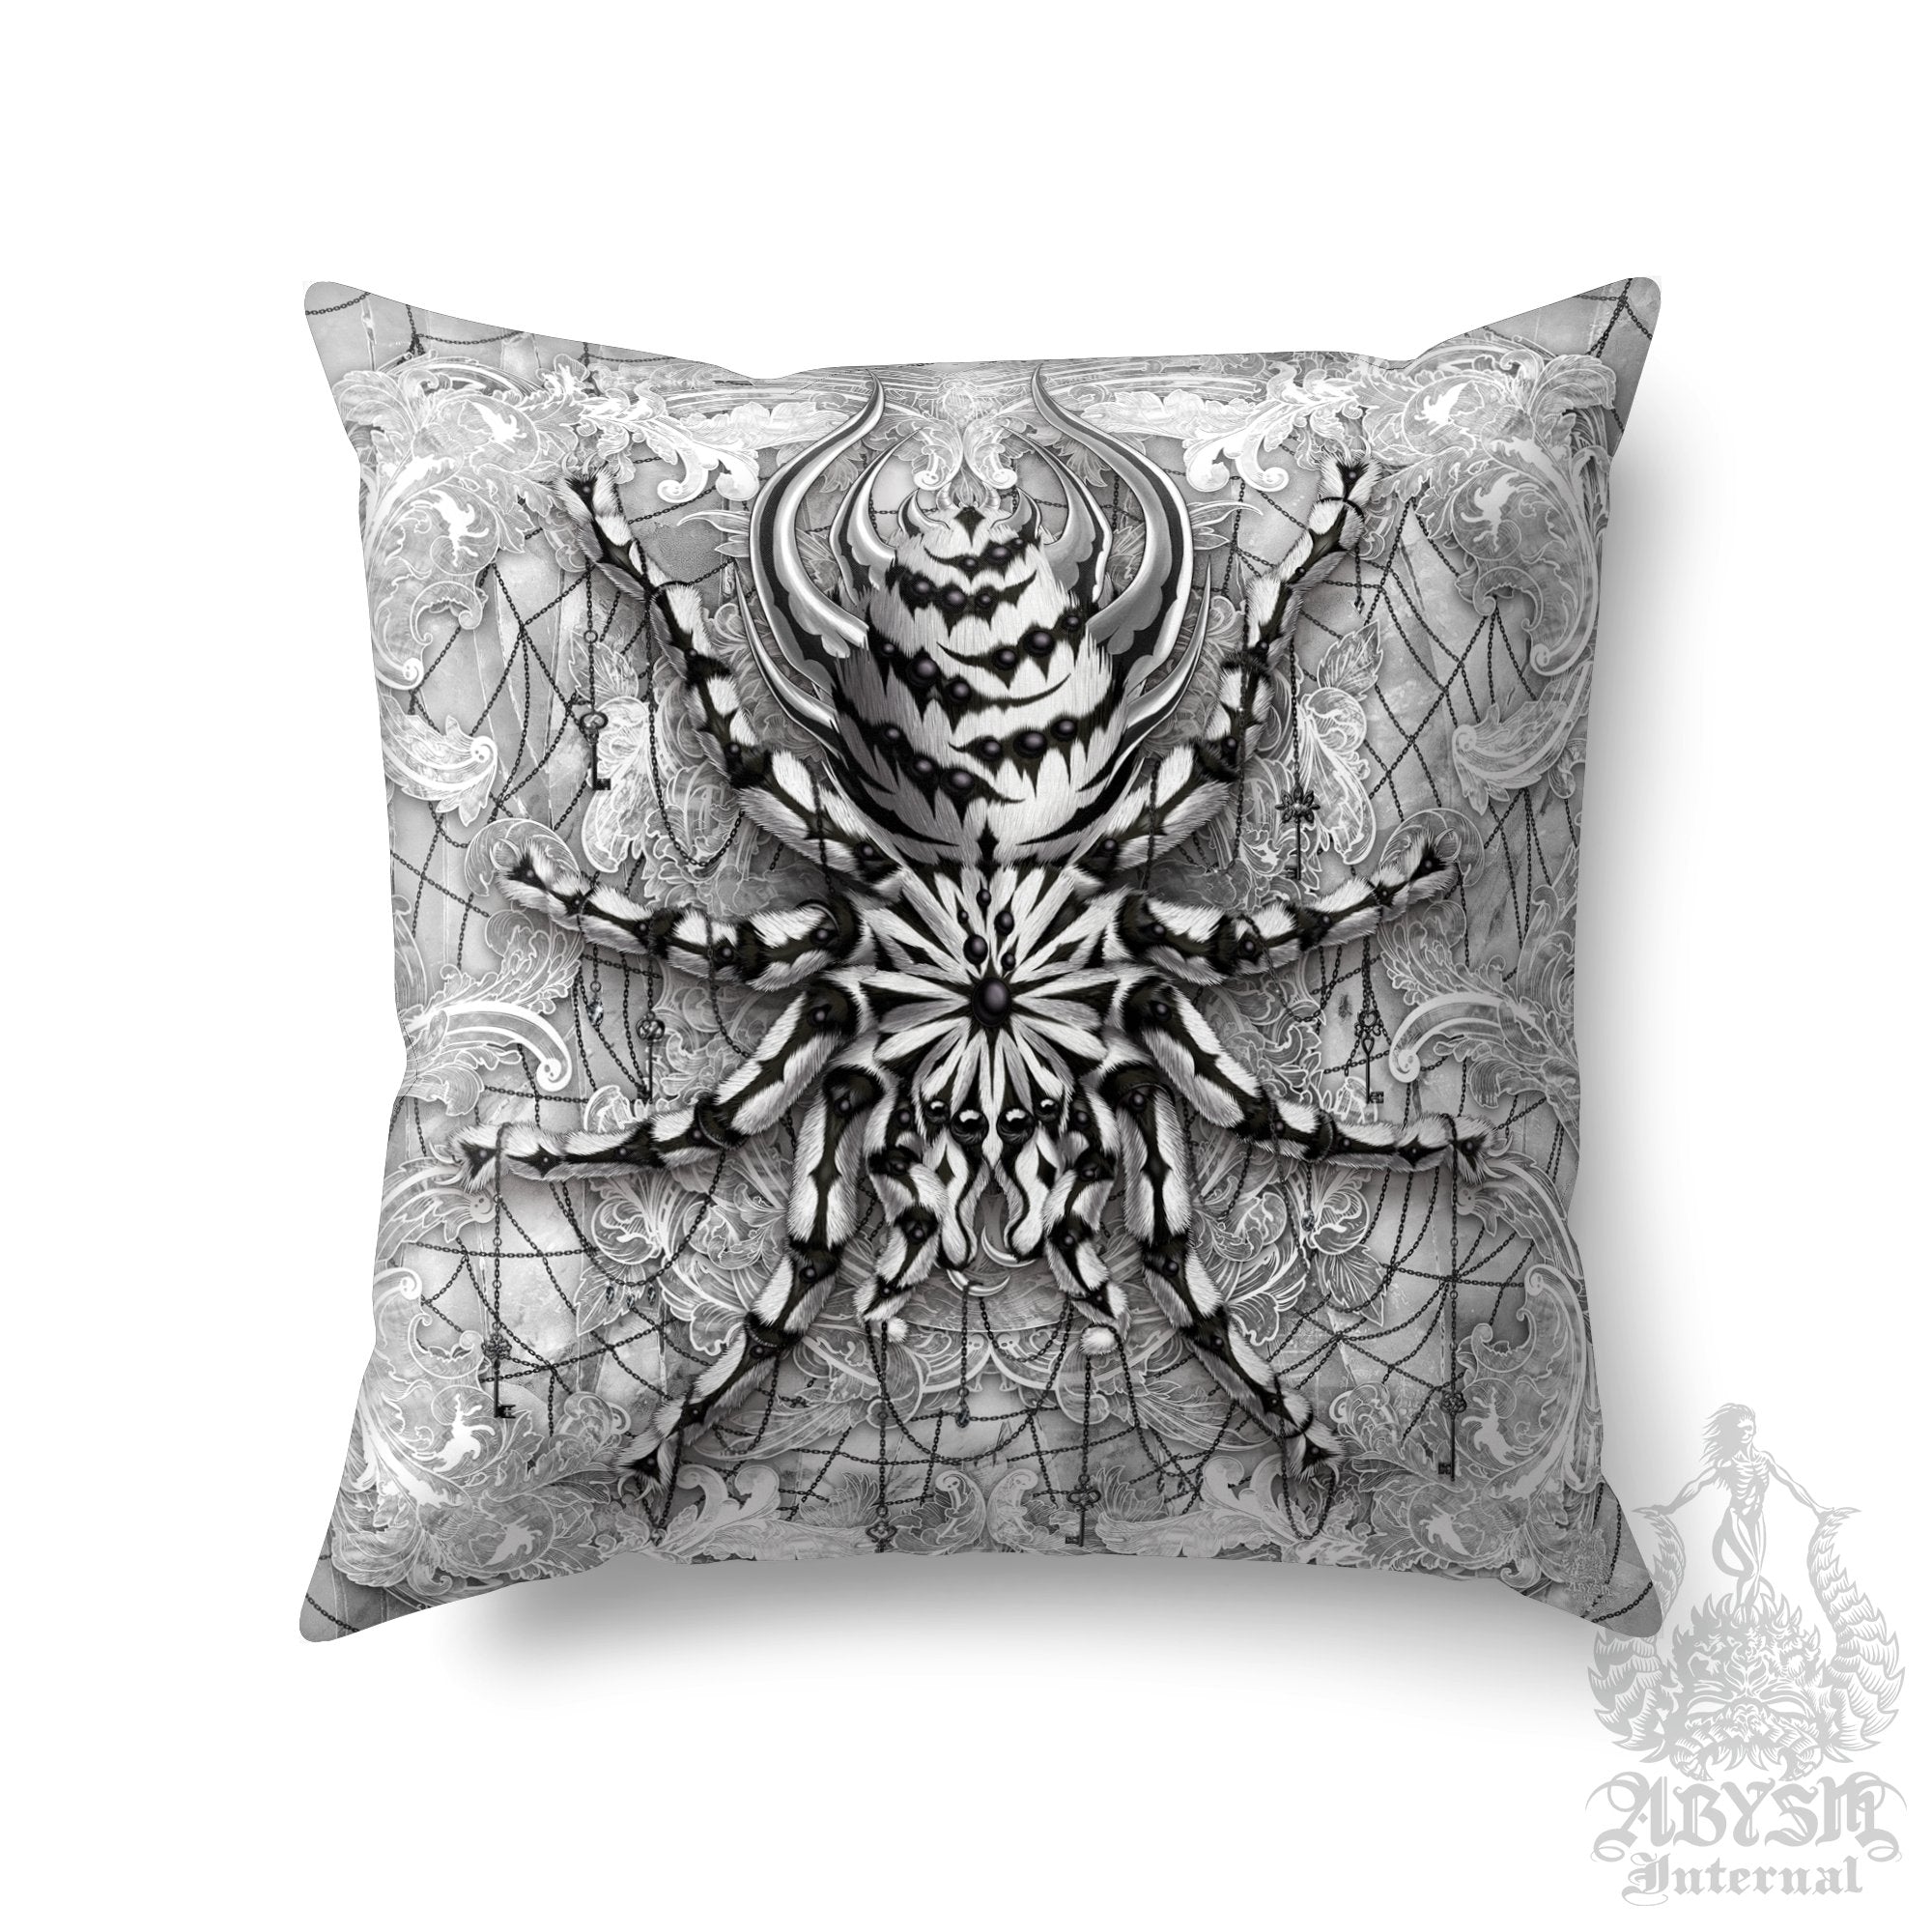 White Goth Throw Pillow, Decorative Accent Cushion, Gothic Room Decor, Alternative Home - Tarantula, Spider, Stone, Black and White - Abysm Internal